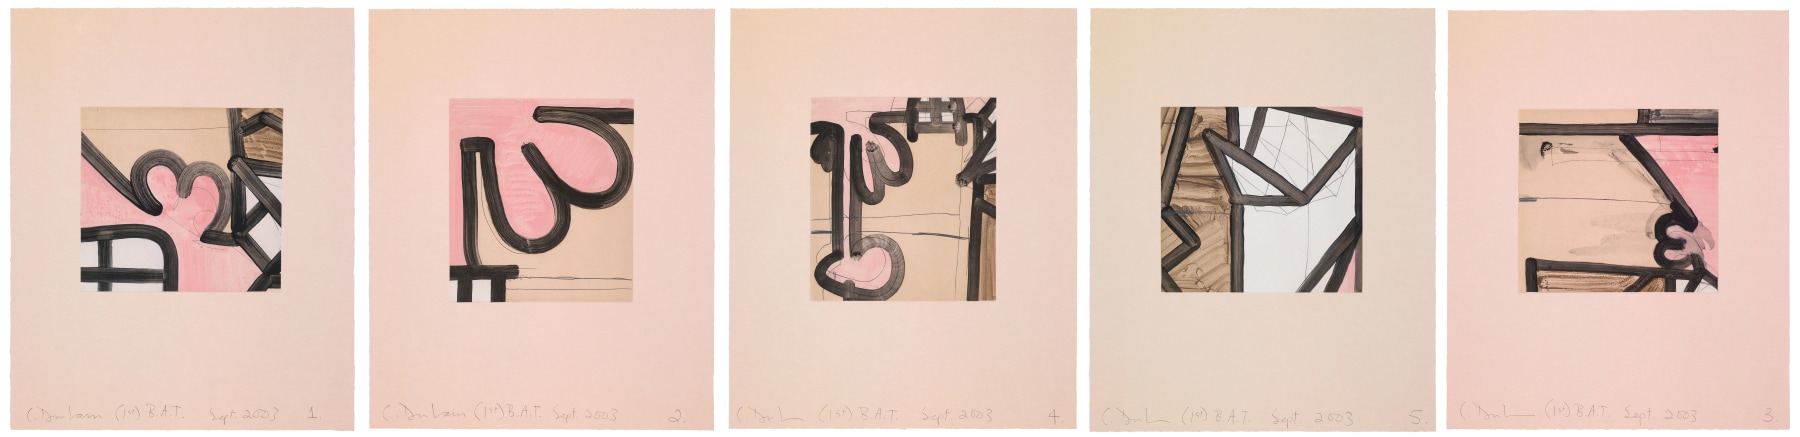 Closing In, 2003
A portfolio of five color etchings with aquatint&amp;nbsp;
Each imagee&amp;nbsp;24 3/4&amp;nbsp;x 20 1/4&amp;nbsp;inches
Edition&amp;nbsp;of 21